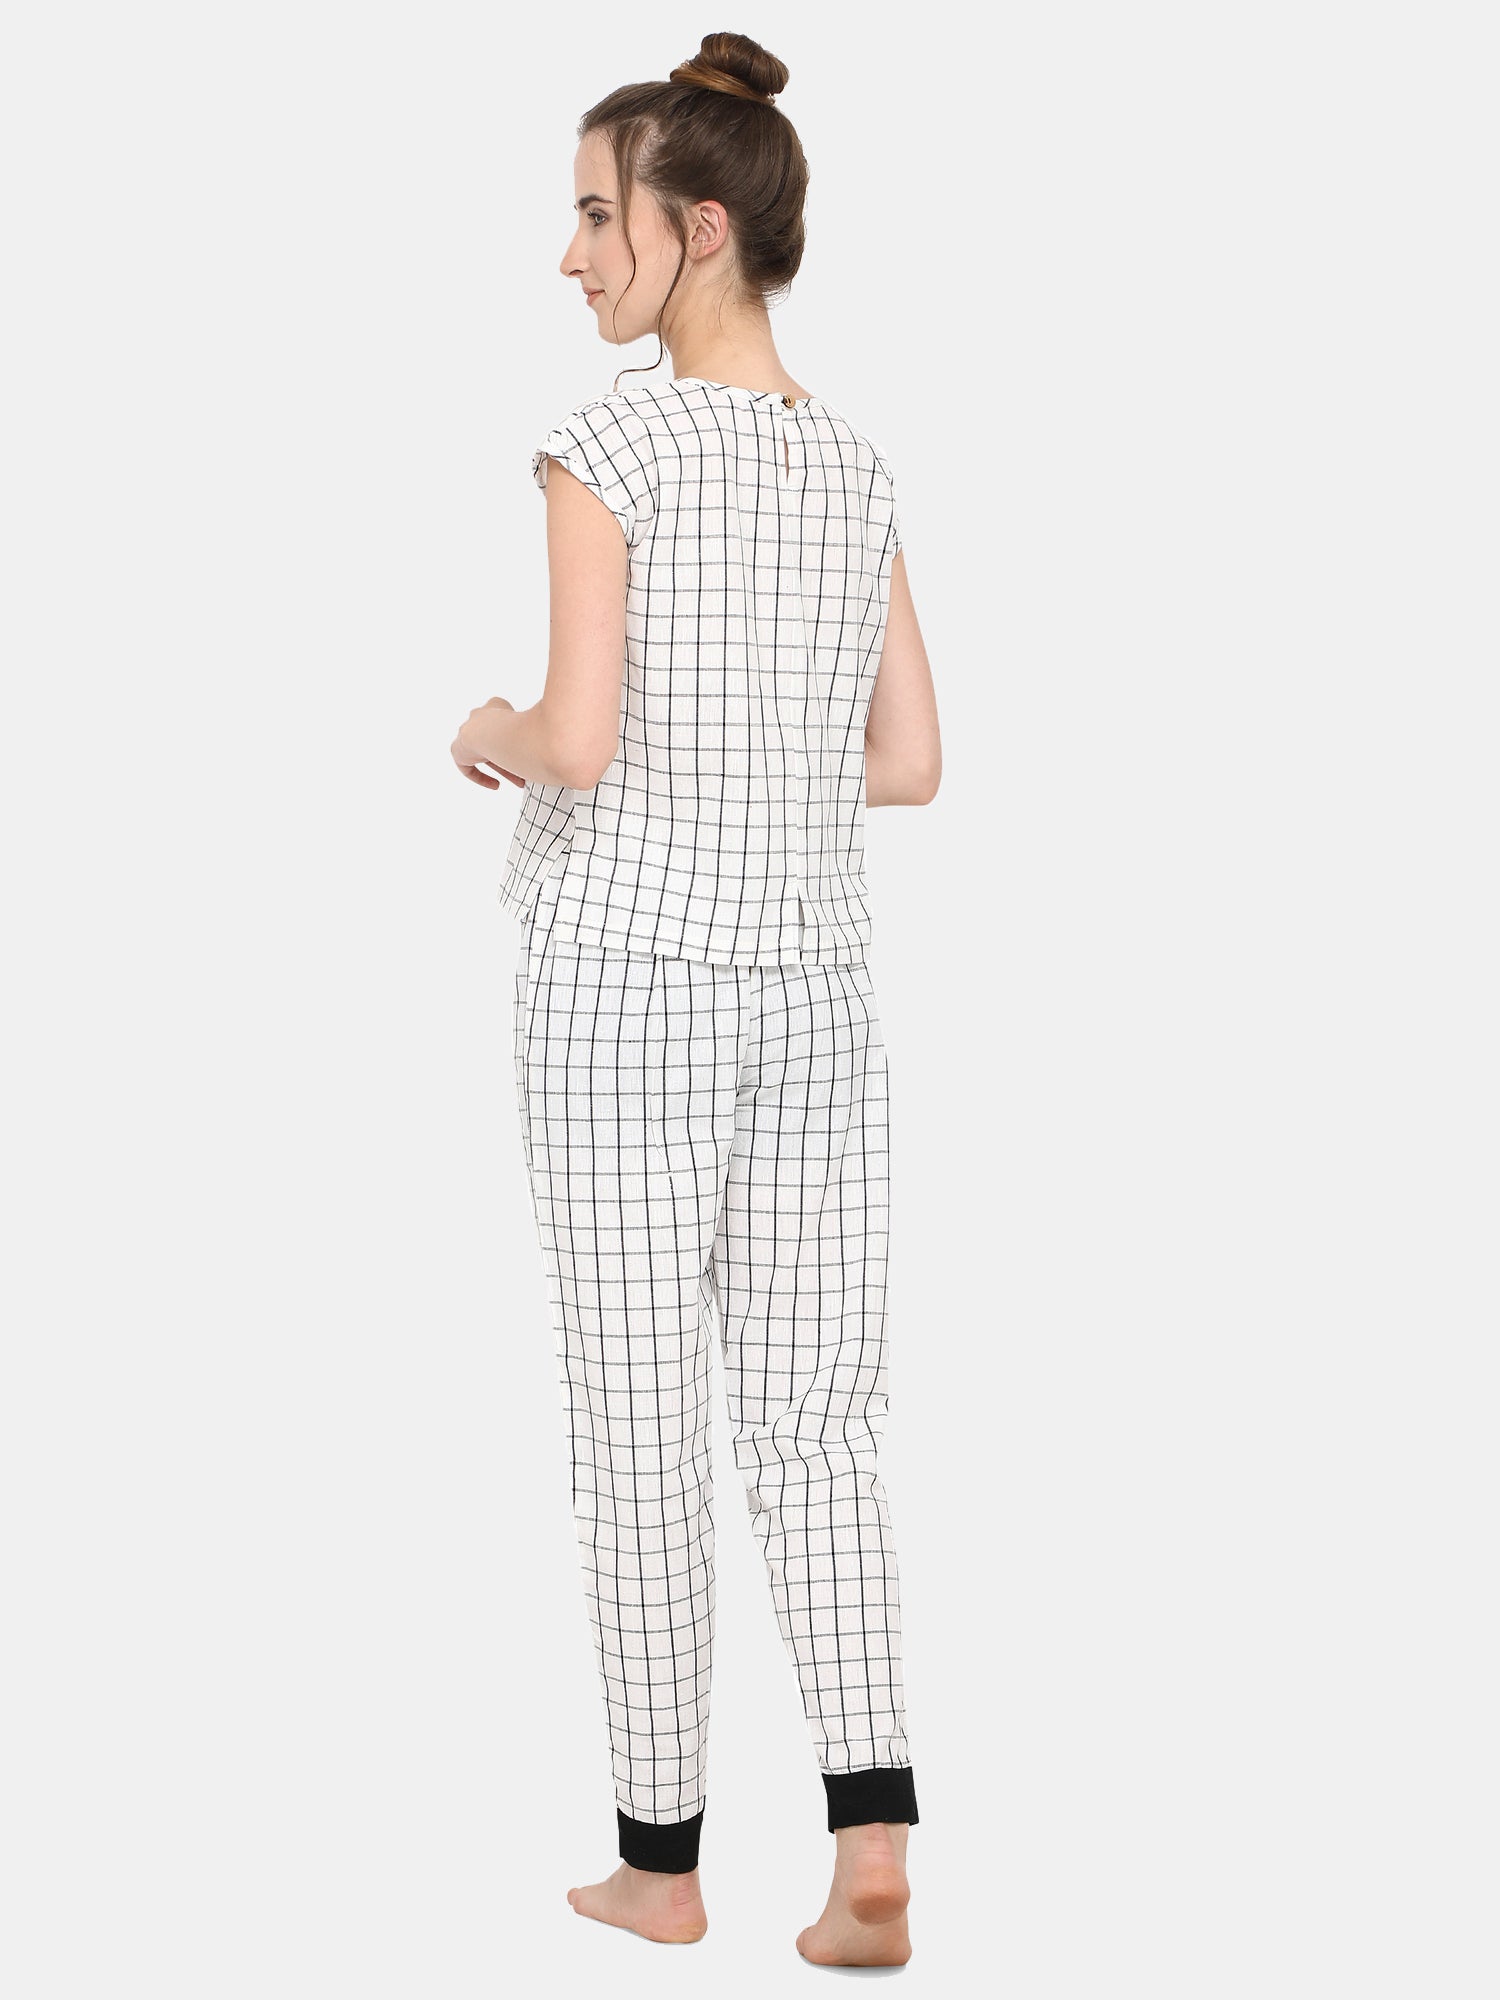 Women's white checkered cotton short night suit  - MESMORA FASHIONS